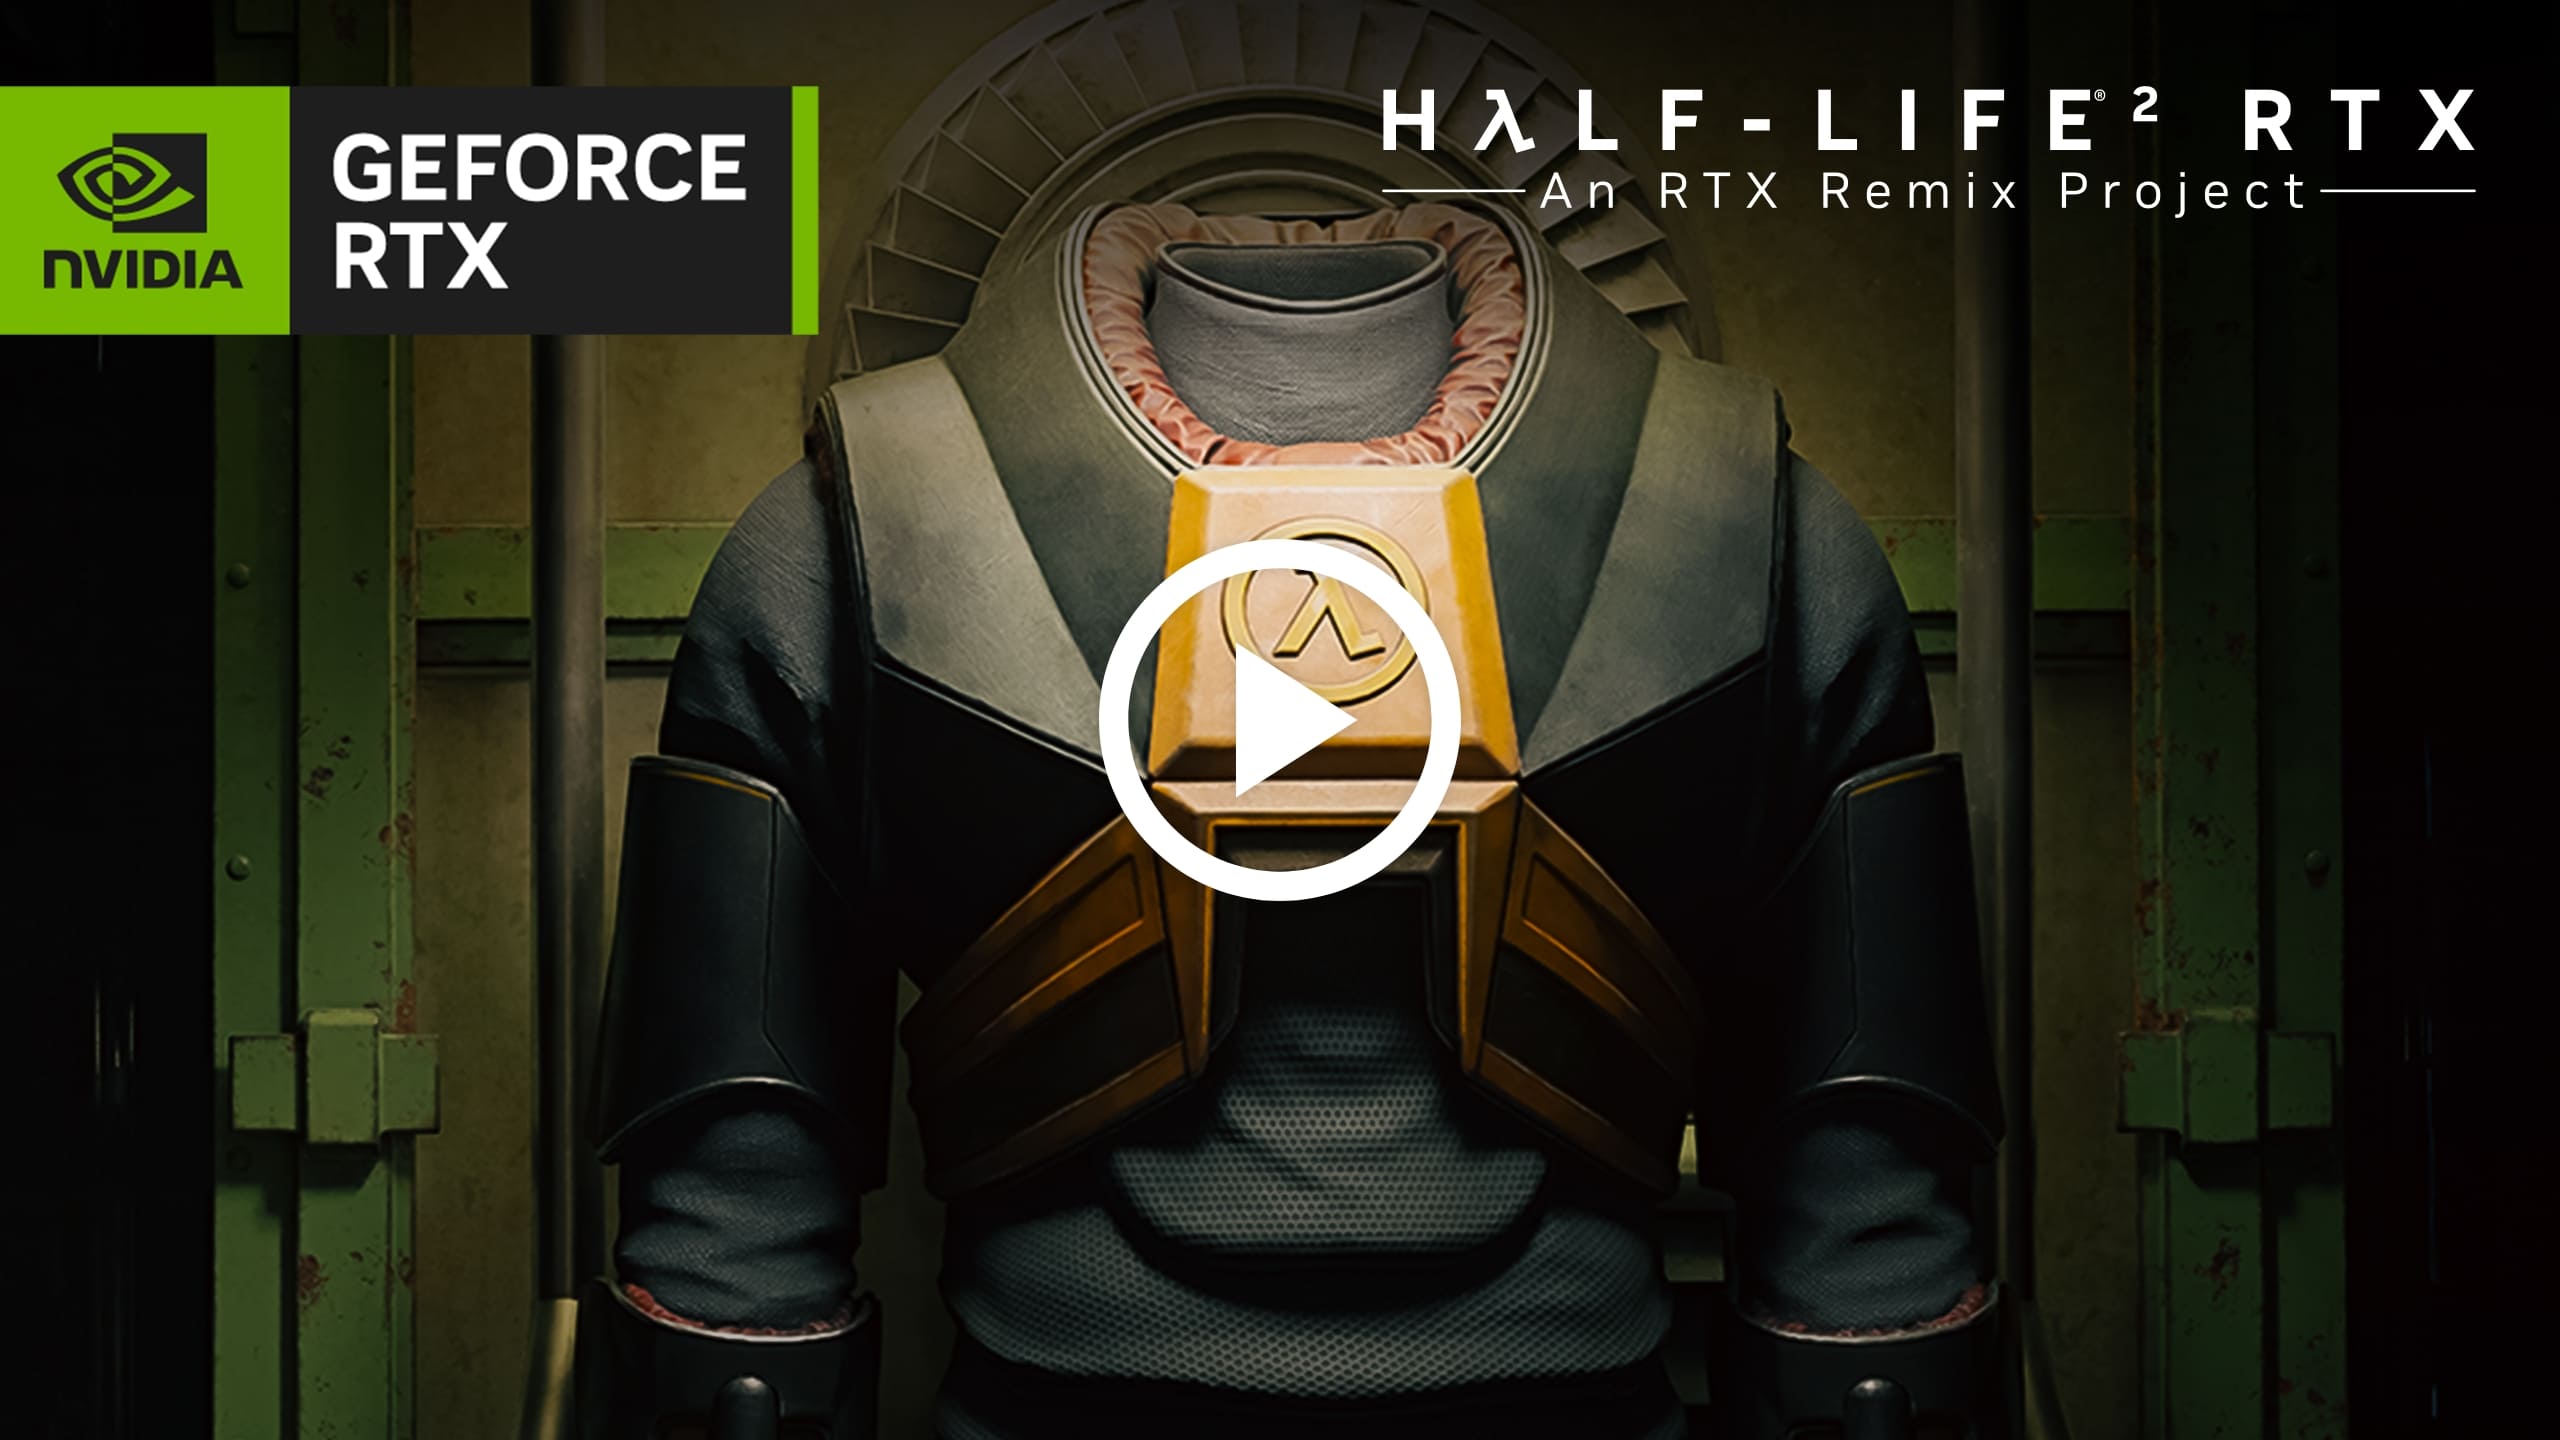 Half-Life 2 RTX: An RTX Remix Project